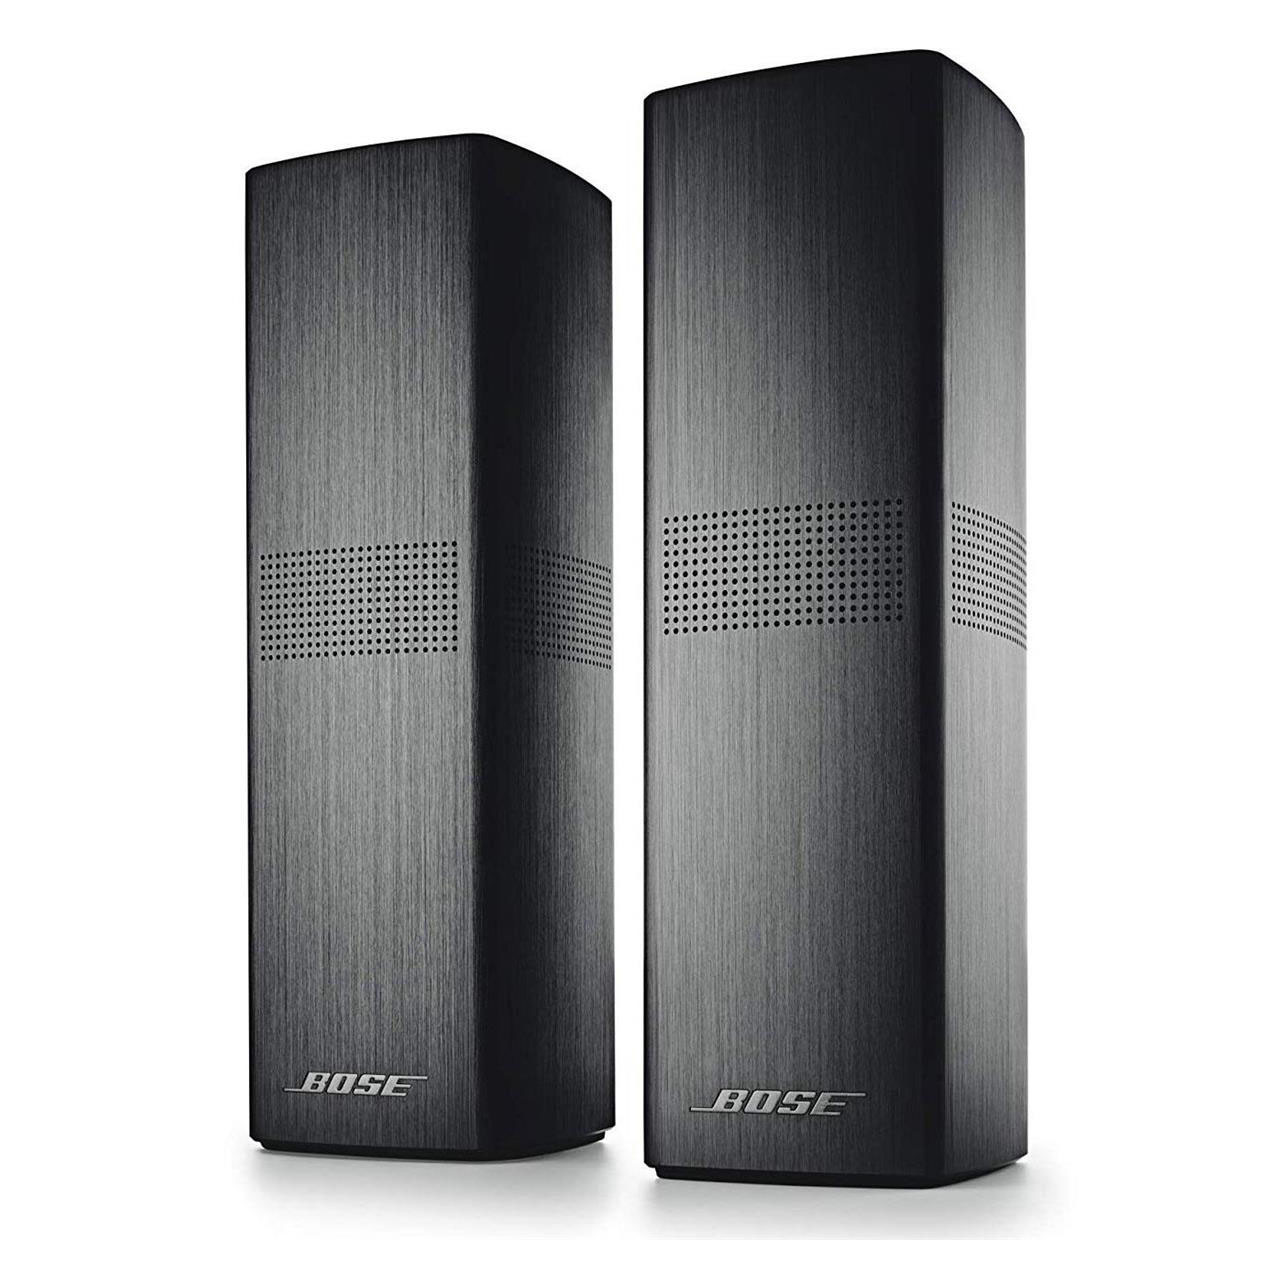 Roux Gedeeltelijk Fantasierijk Bose Surround Speakers 700 - Black - EZEE.com: High-end made ezee!